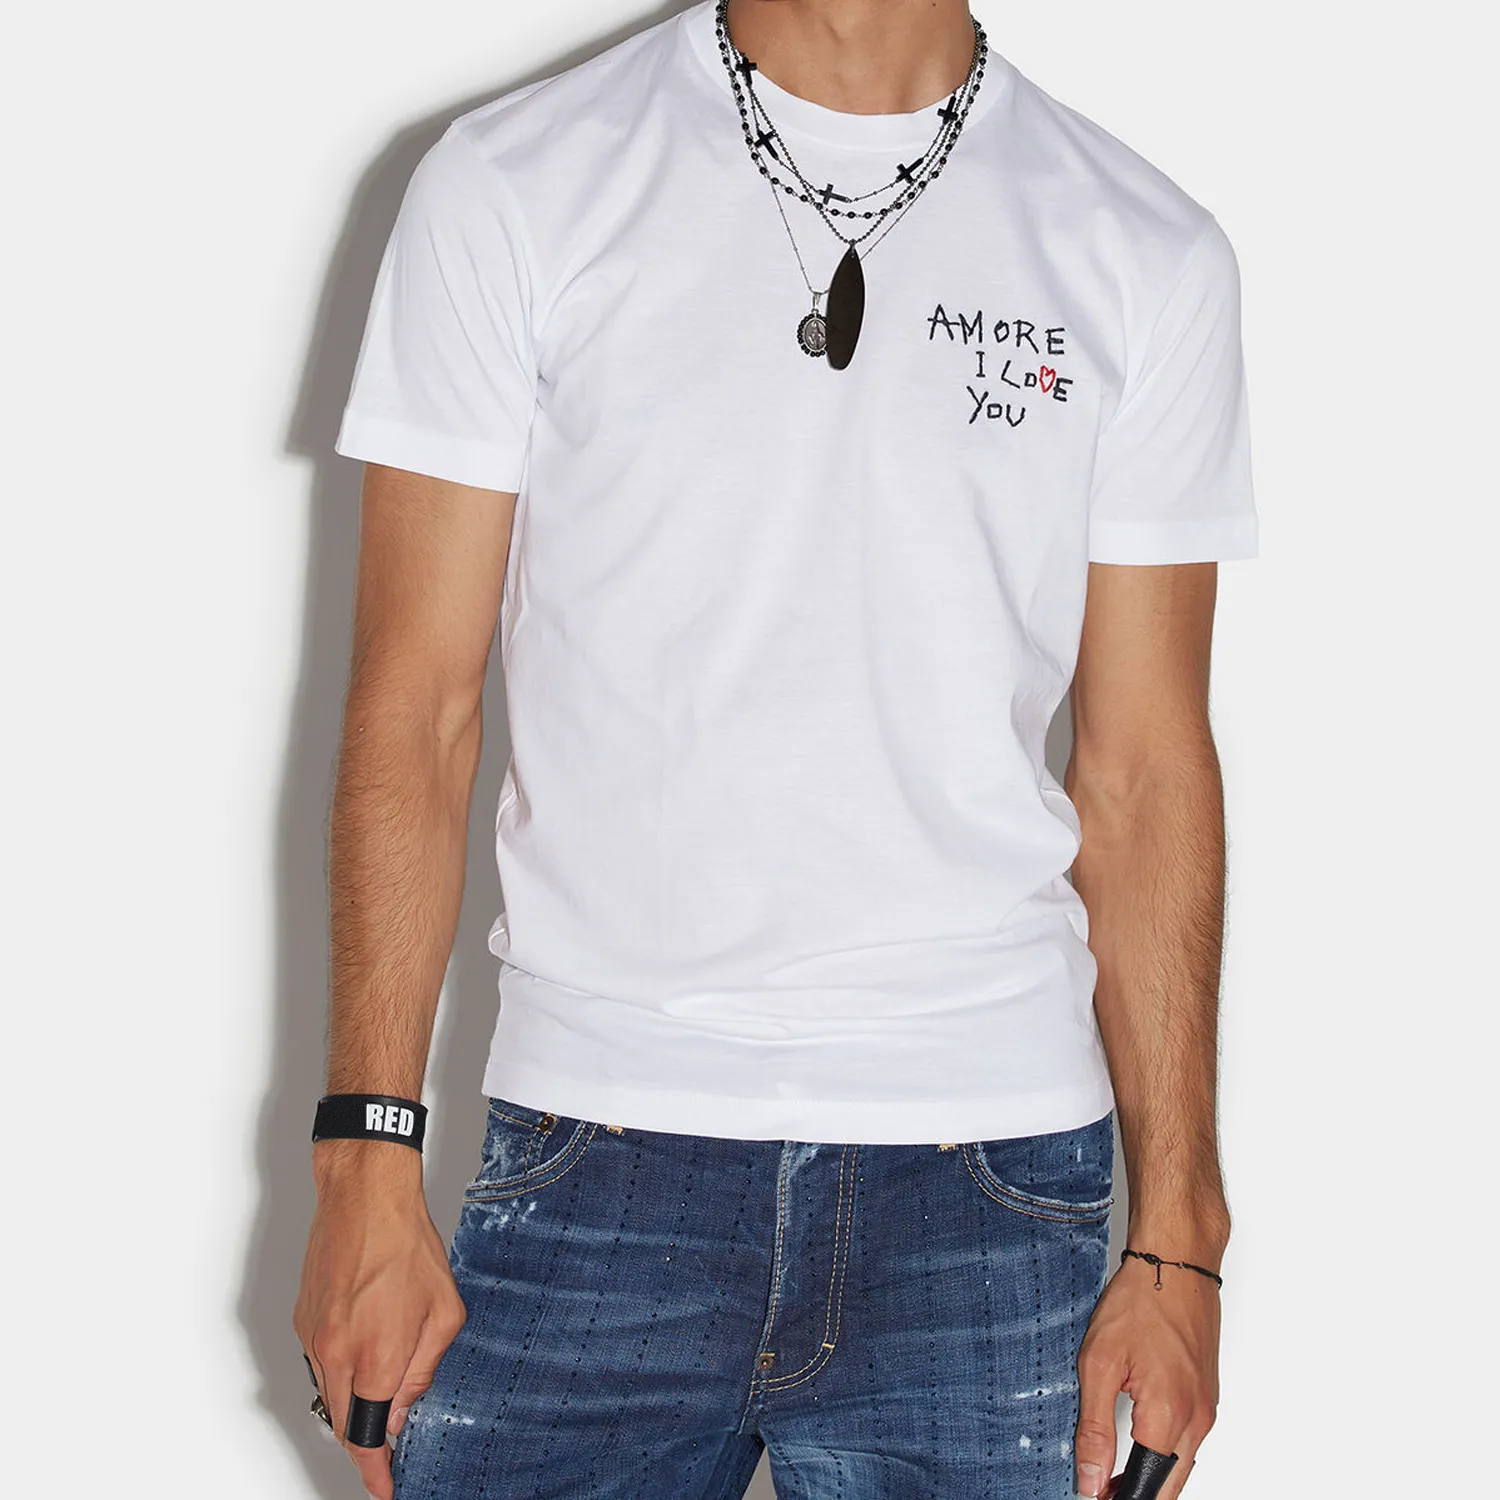 DSQ Phantom Turtle Men's T-shirts Mens Designer T Shirts Black White Amore I Love You Cool T-Shirt Men Summer Fashion Casual Street T-Shirt Tops Plus Size M-XXXL 68760